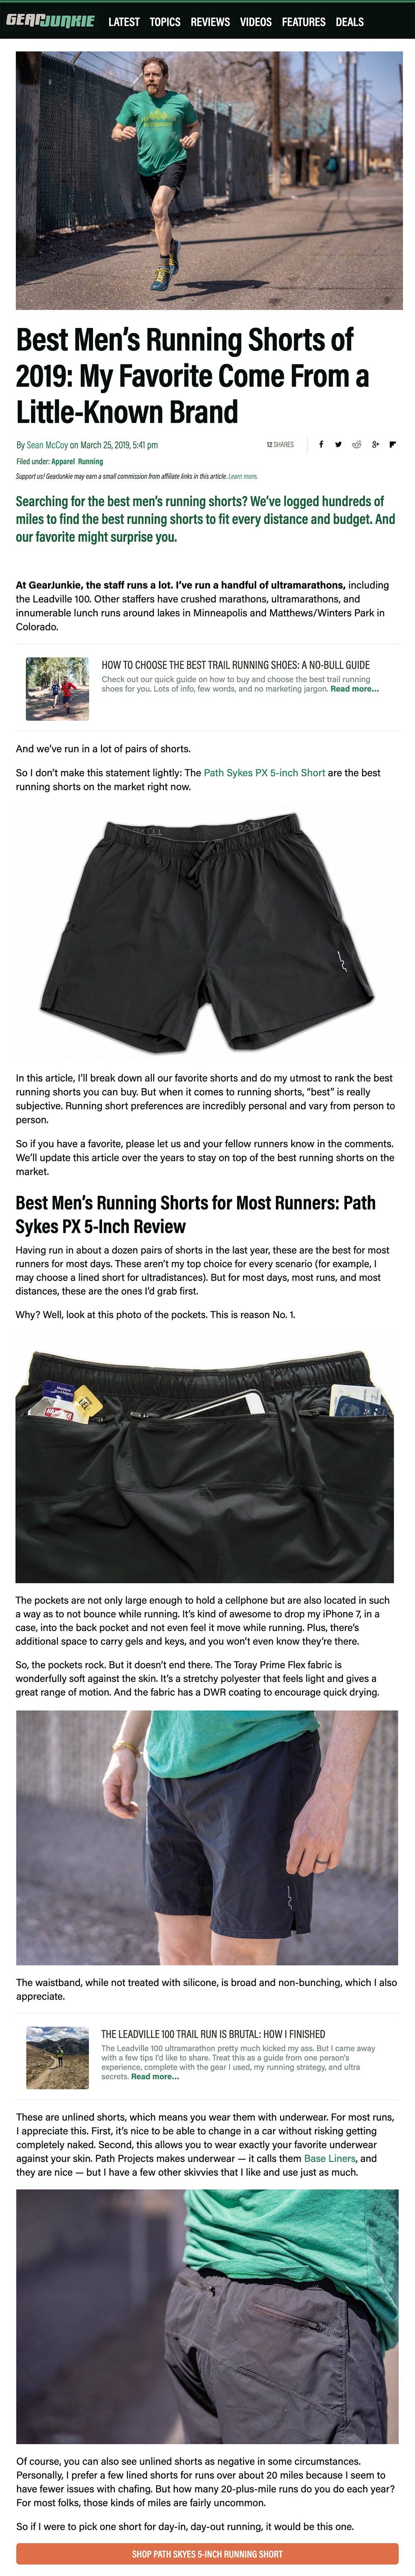 Sykes PX 5" Short featured in Gear Junkie